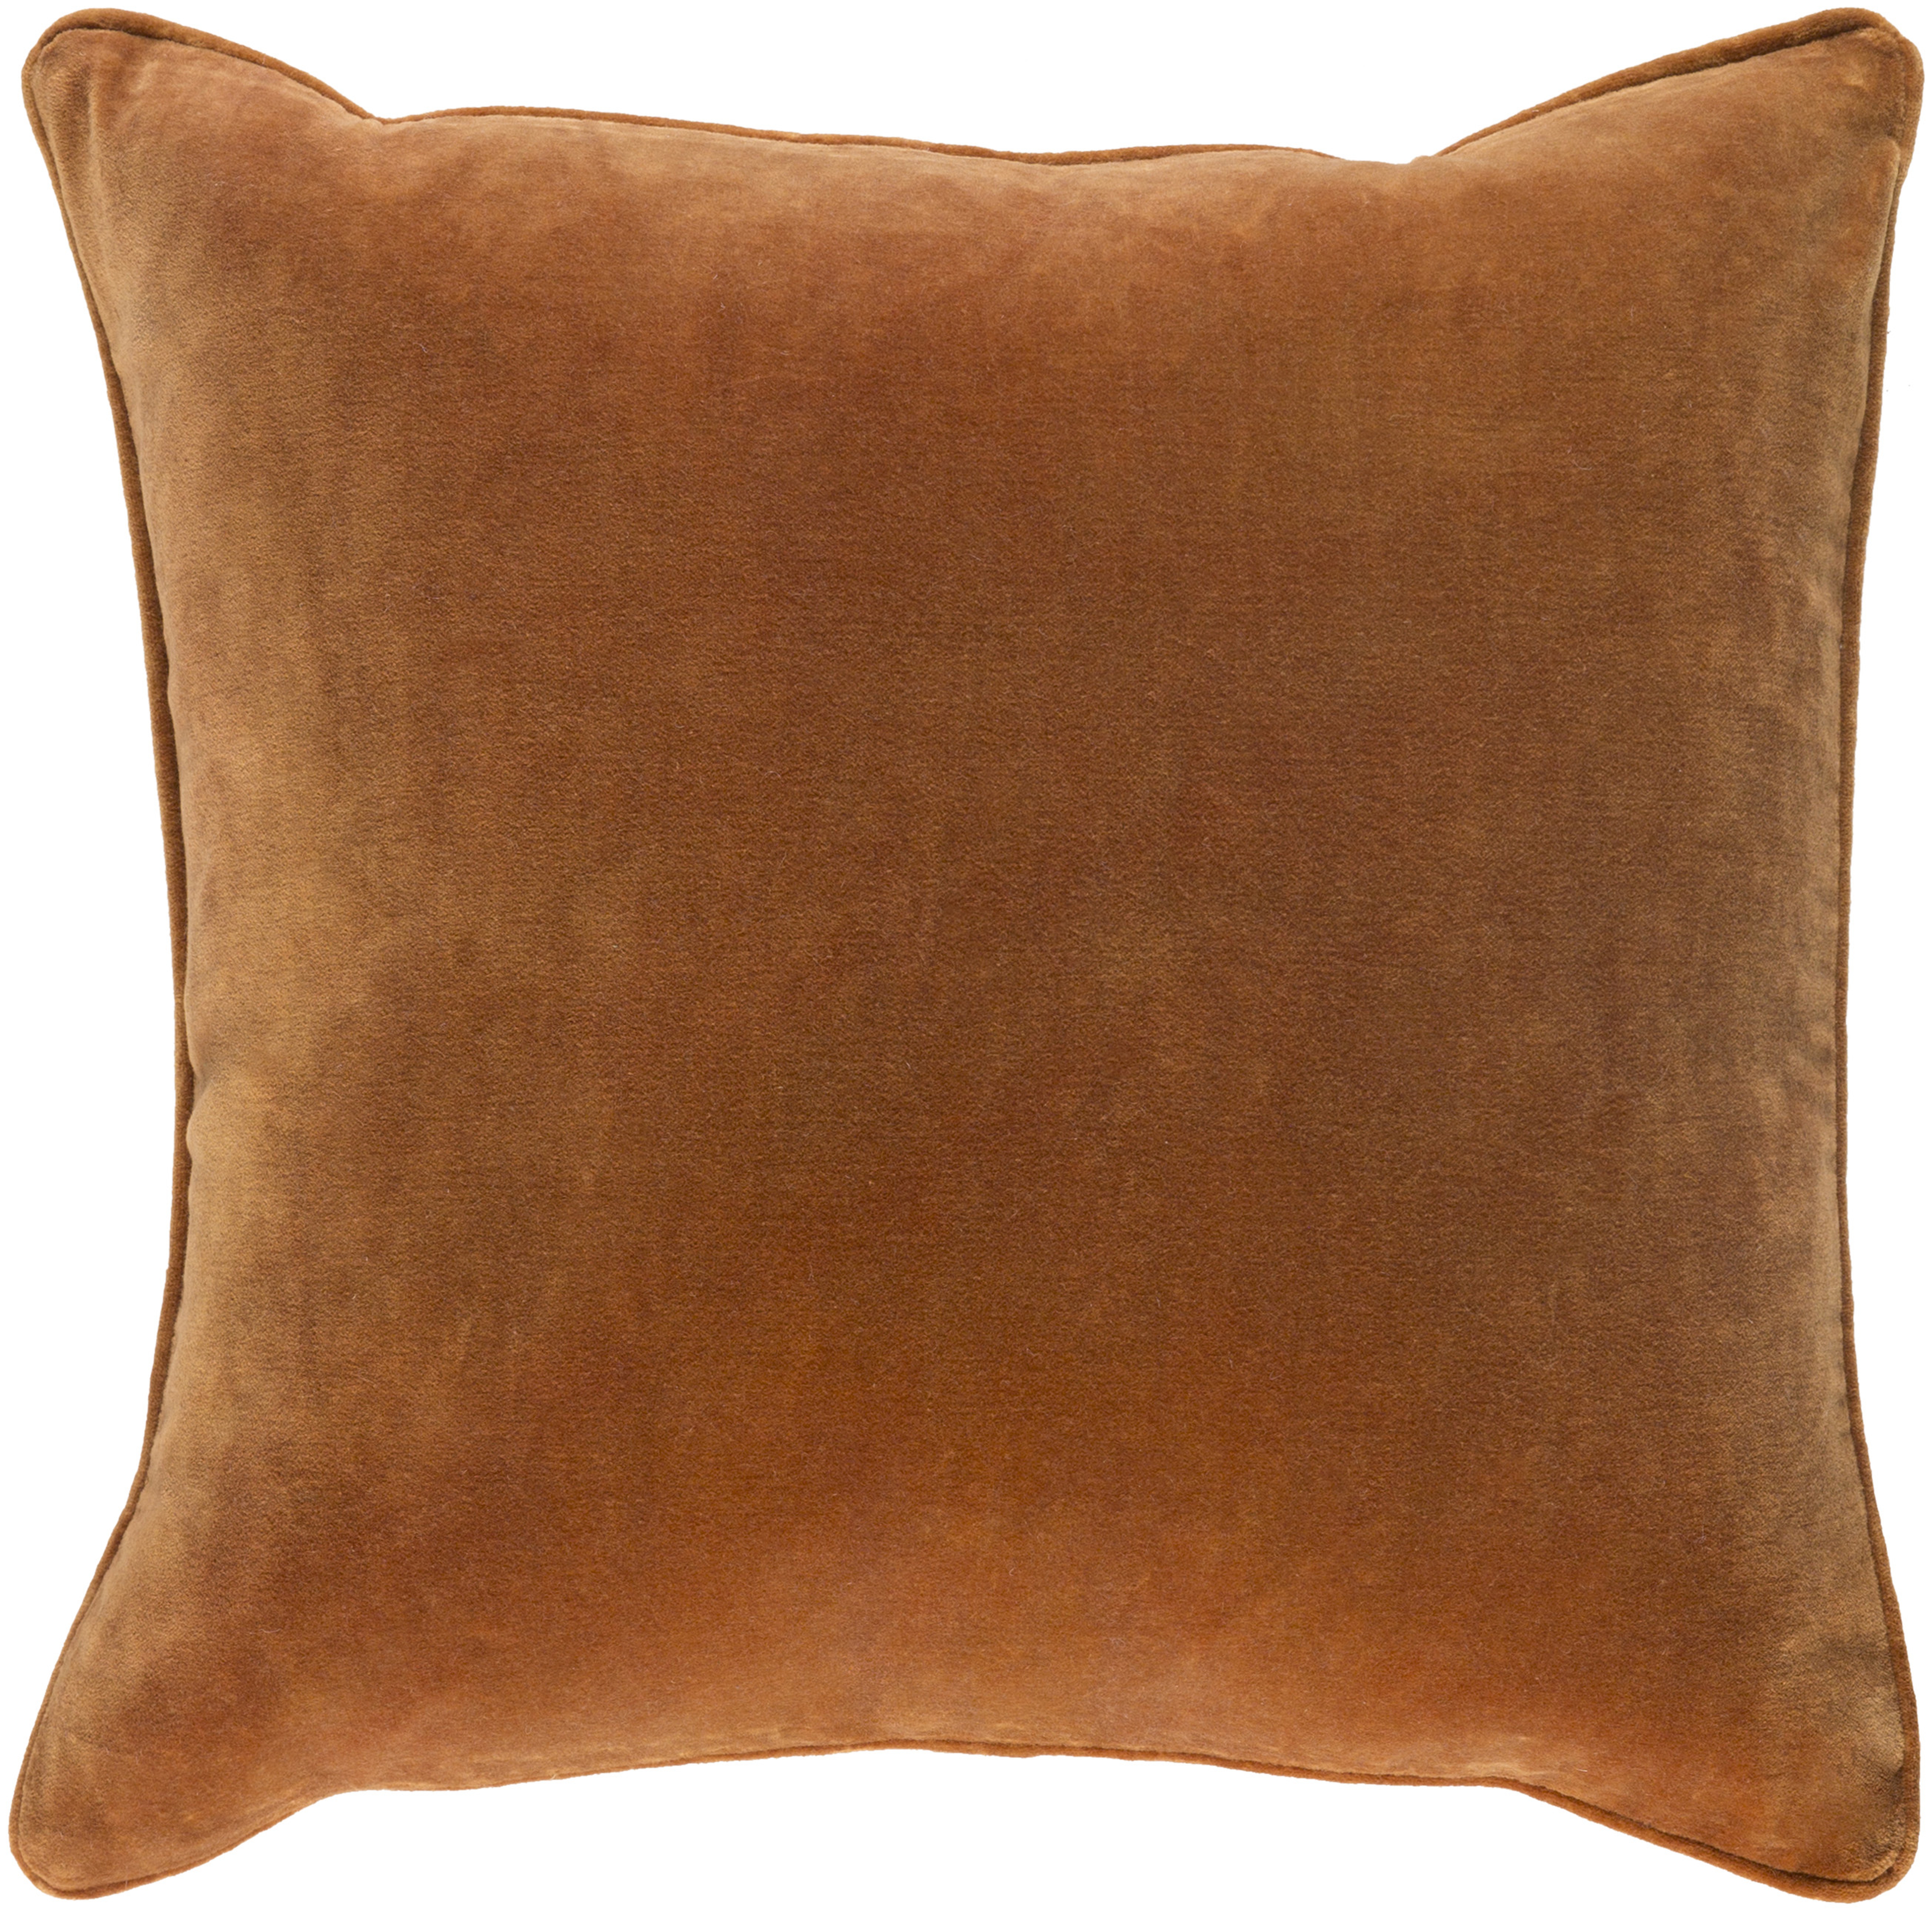 Safflower Throw Pillow, 18" x 18", with down insert - Surya